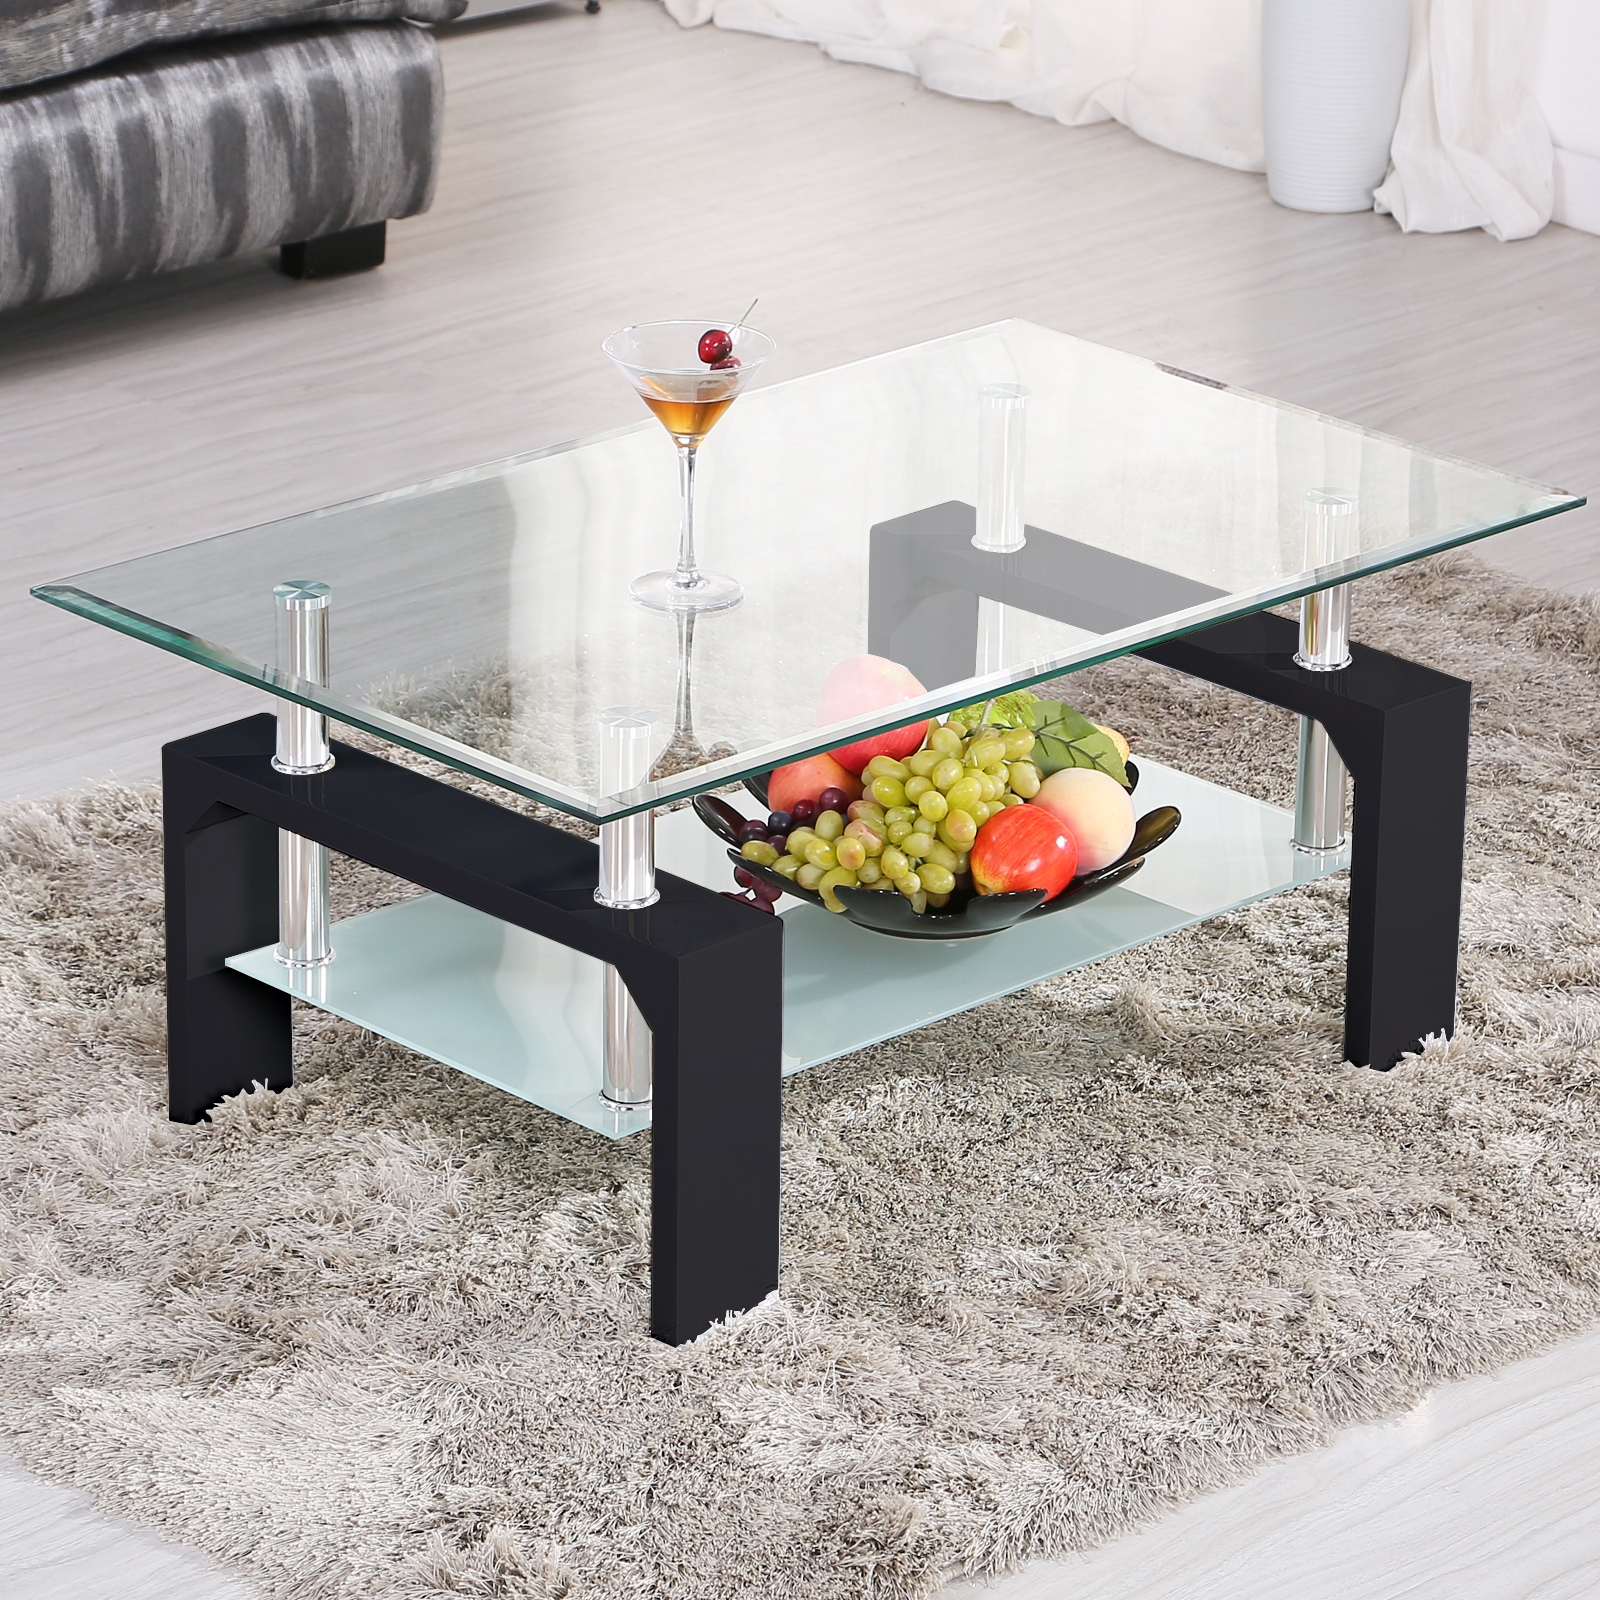 Uenjoy Rectangular Glass Coffee Table Shelf Chrome Black Wood Living Room Furniture, Black - image 1 of 8